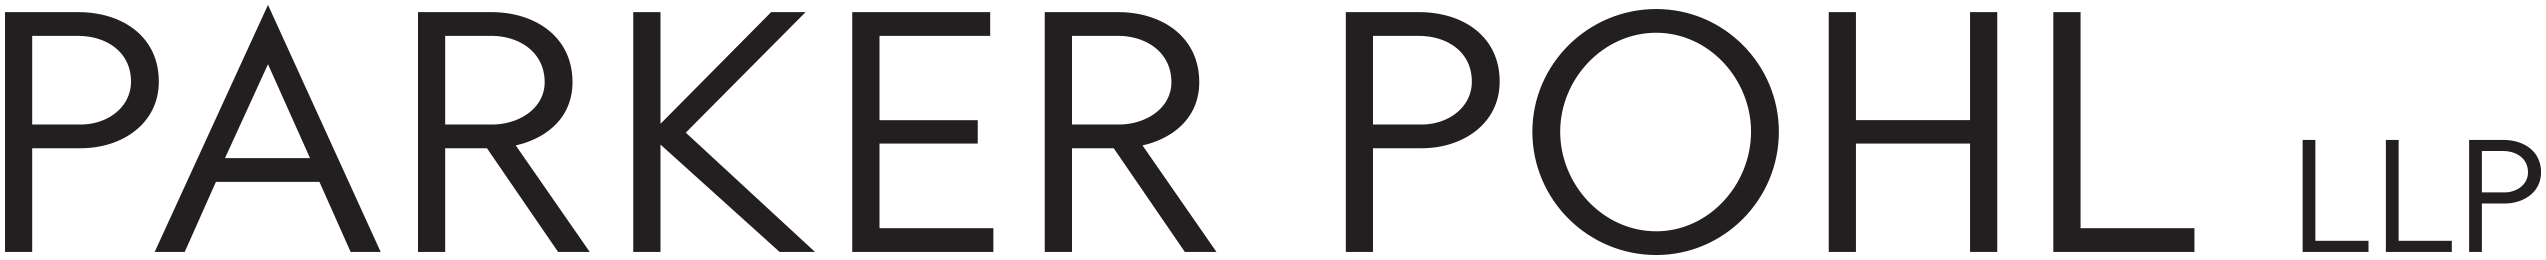 Parker_Pohl_Logo